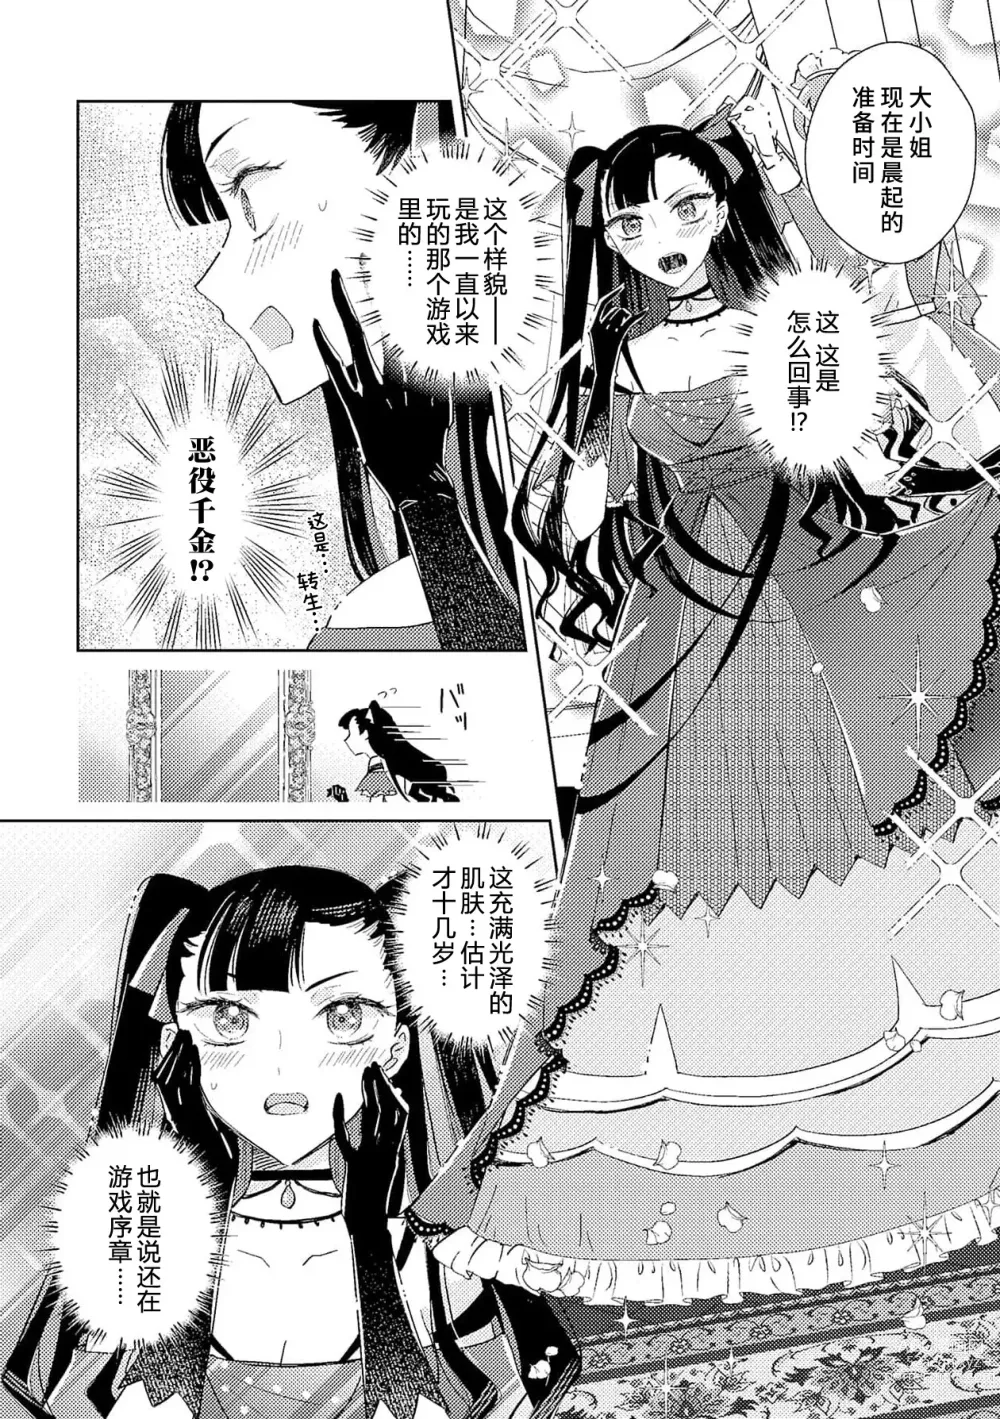 Page 6 of manga 身为恶役千金，堕落于魔界王子身下这条路线真的可以有？ 1-4